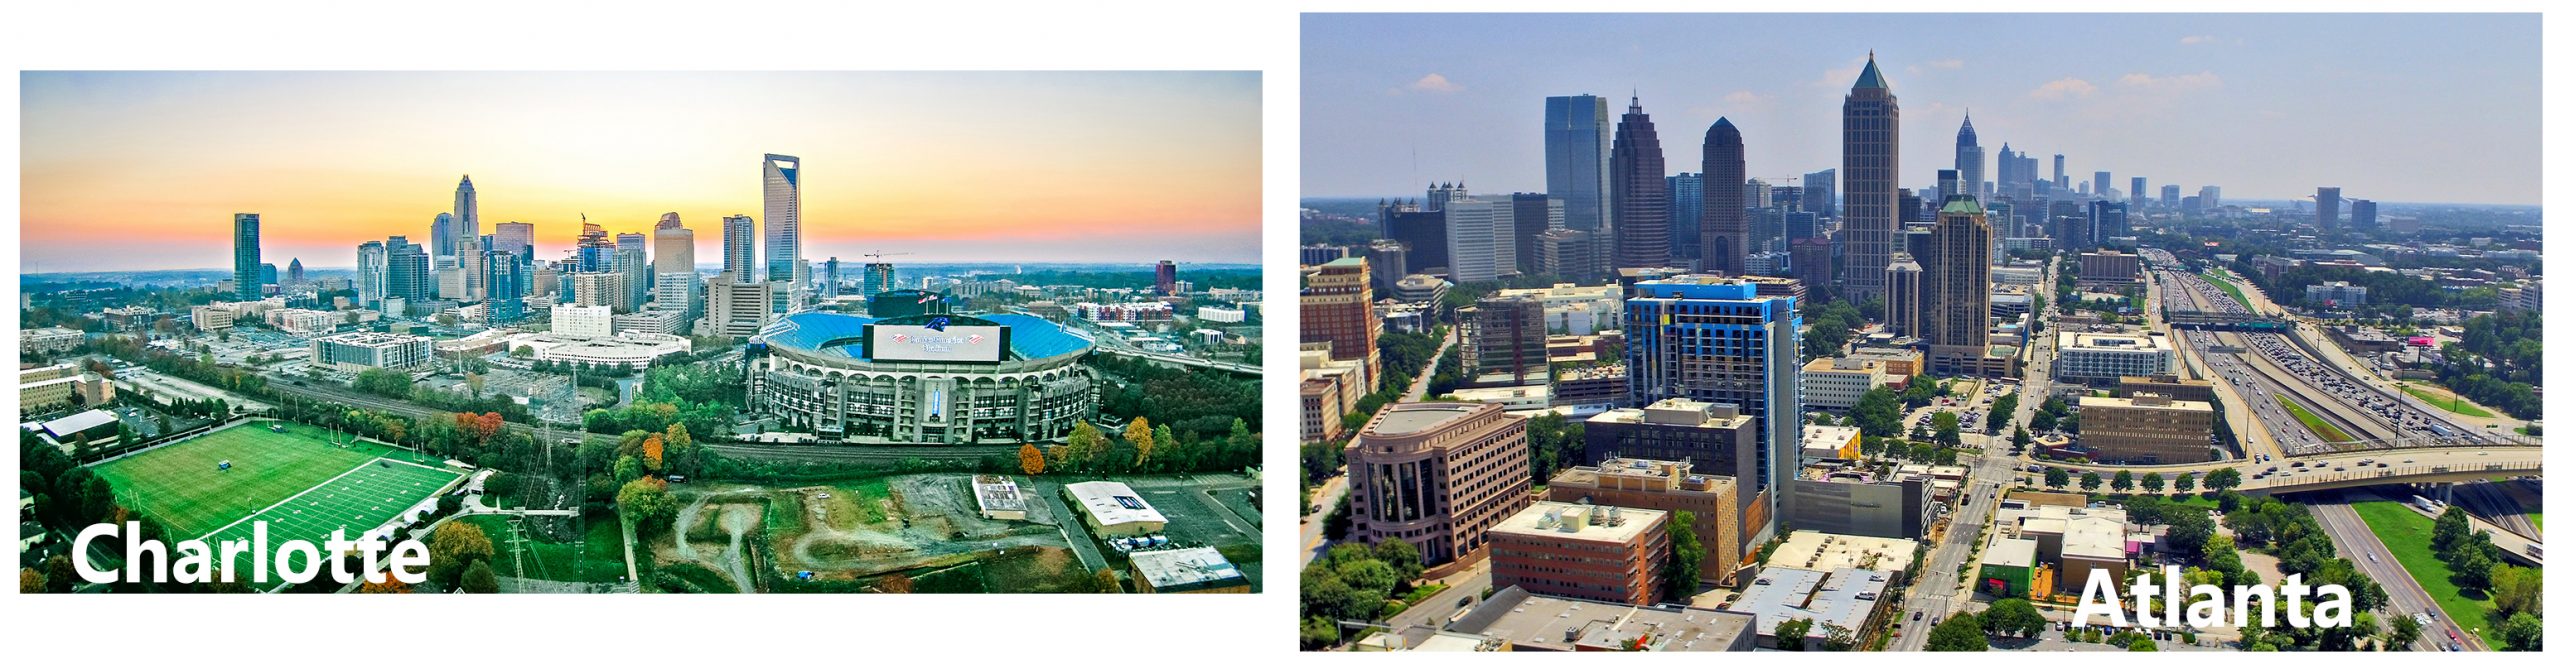 Charlotte Vs Atlanta City Comparisons Insight22